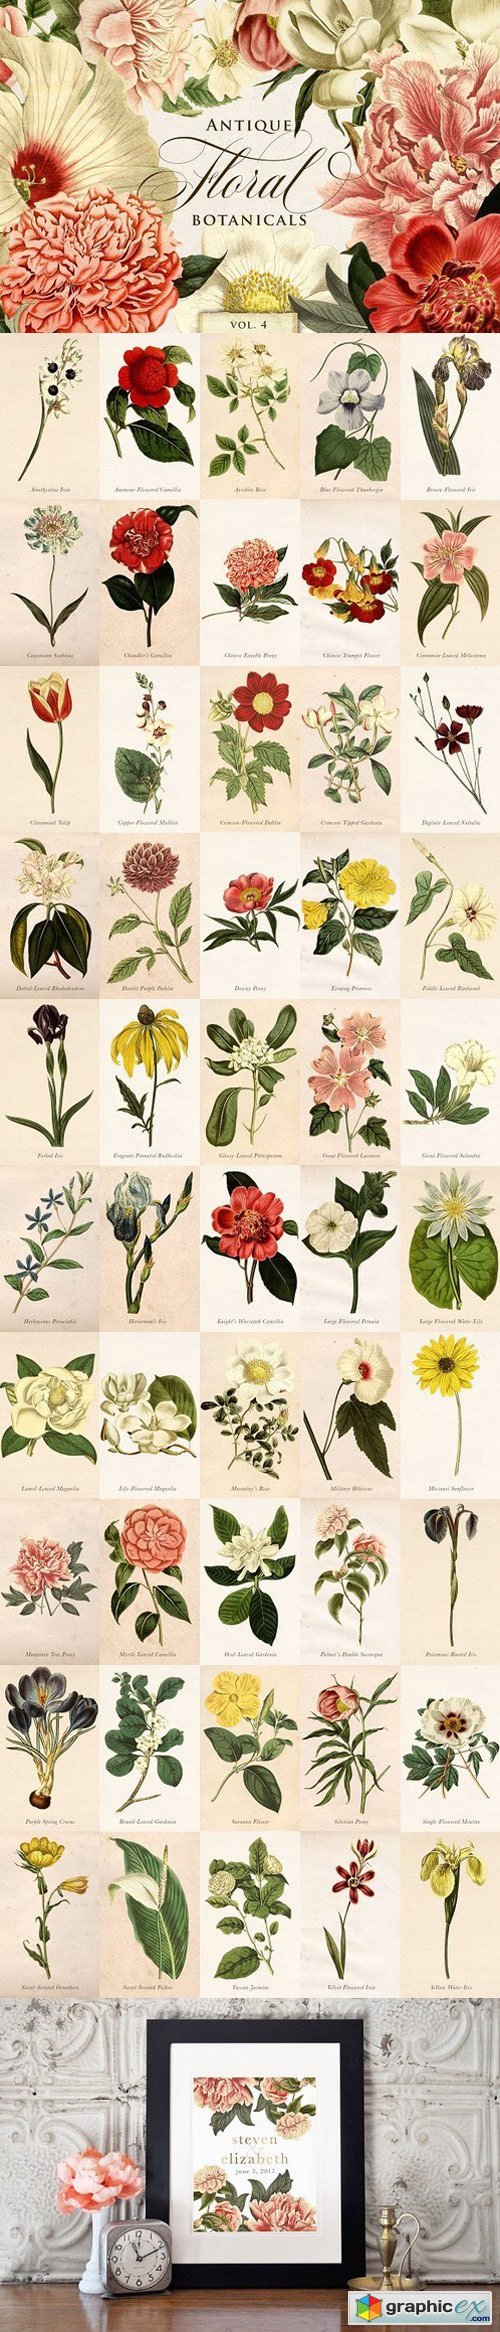 Antique Floral Botanical Graphics 4